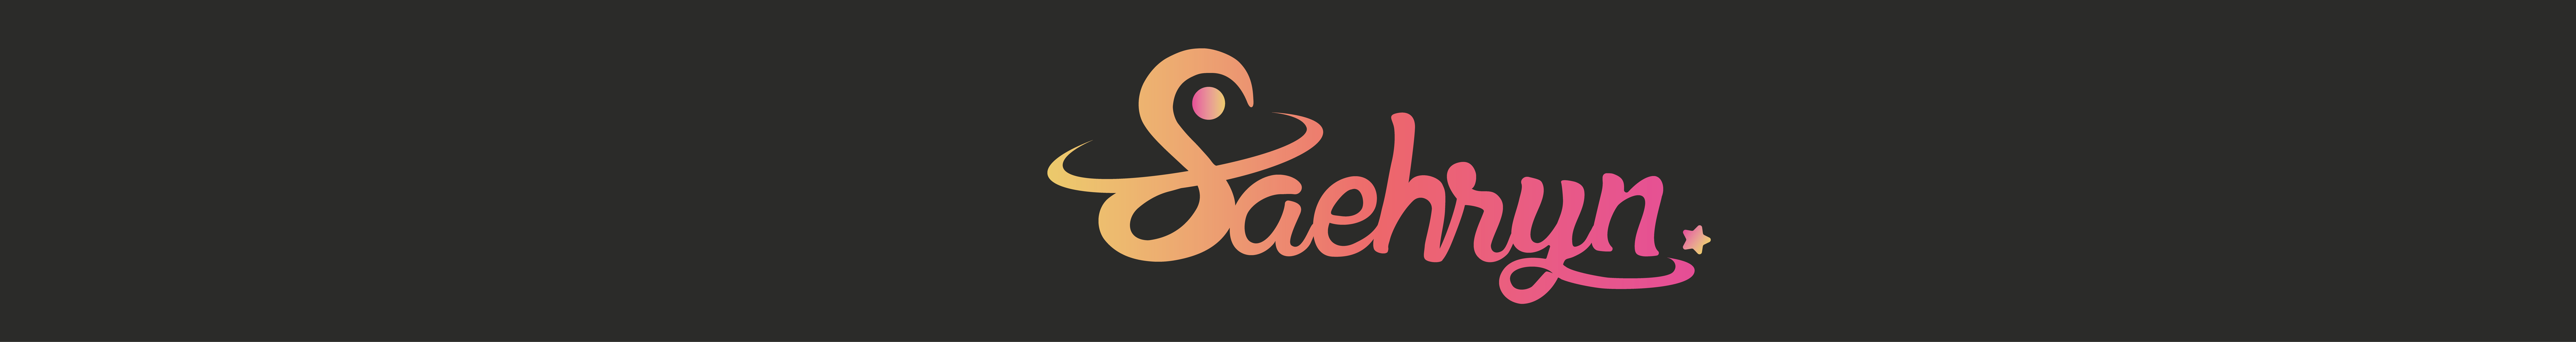 Saehryn 🌙s profilbanner